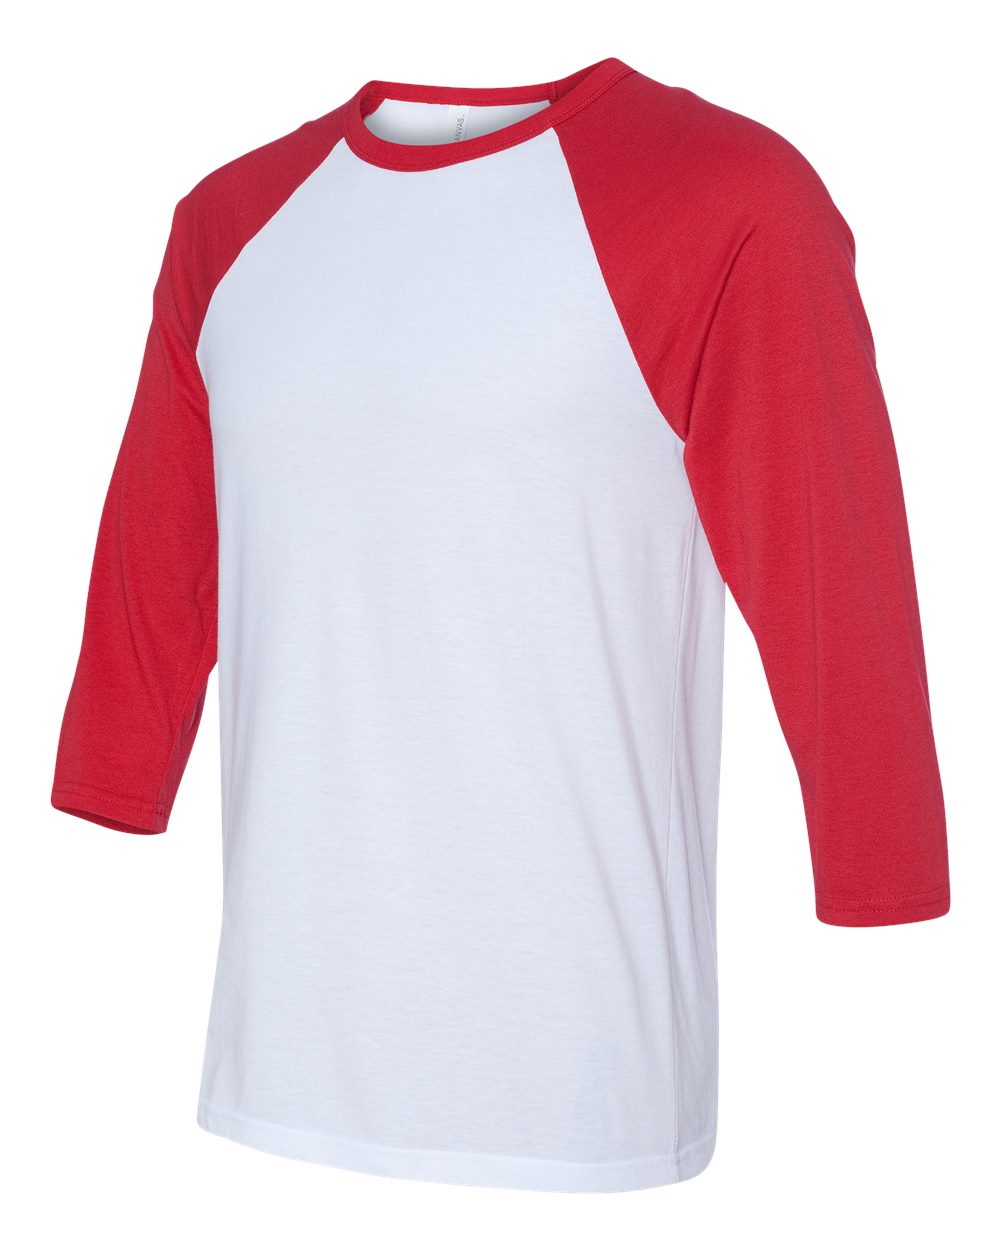 Bella + Canvas Unisex 3/4-Sleeve Baseball T-Shirt